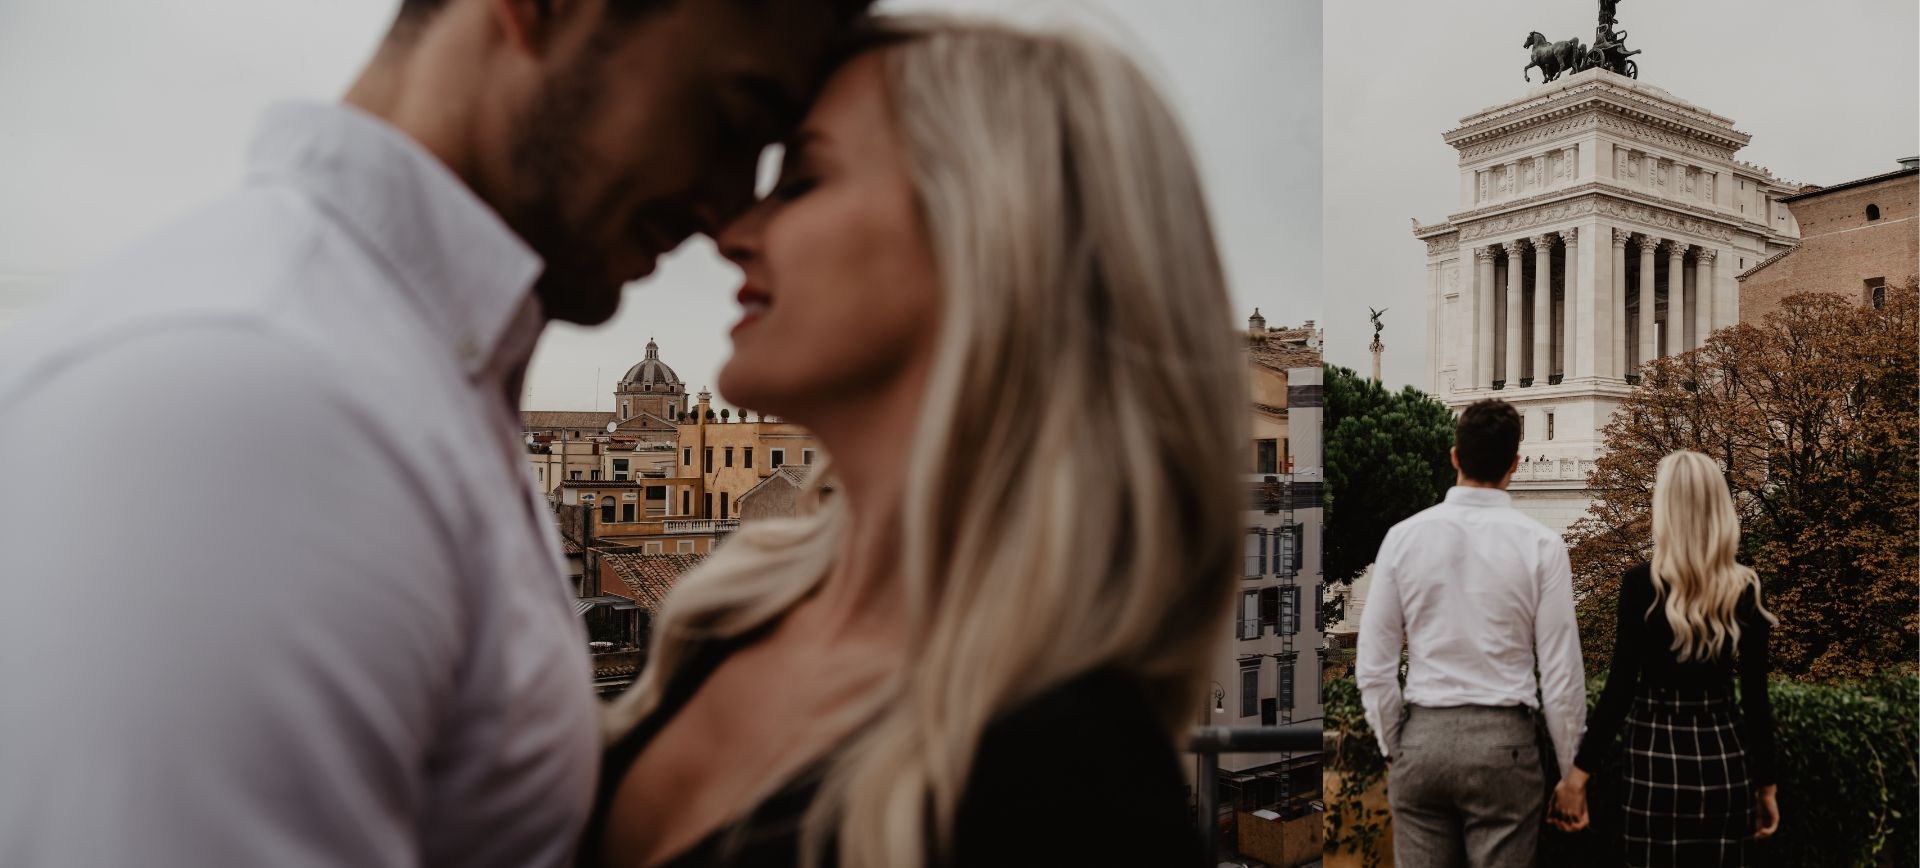 rome couple photoshoot in italy wedding anniversary